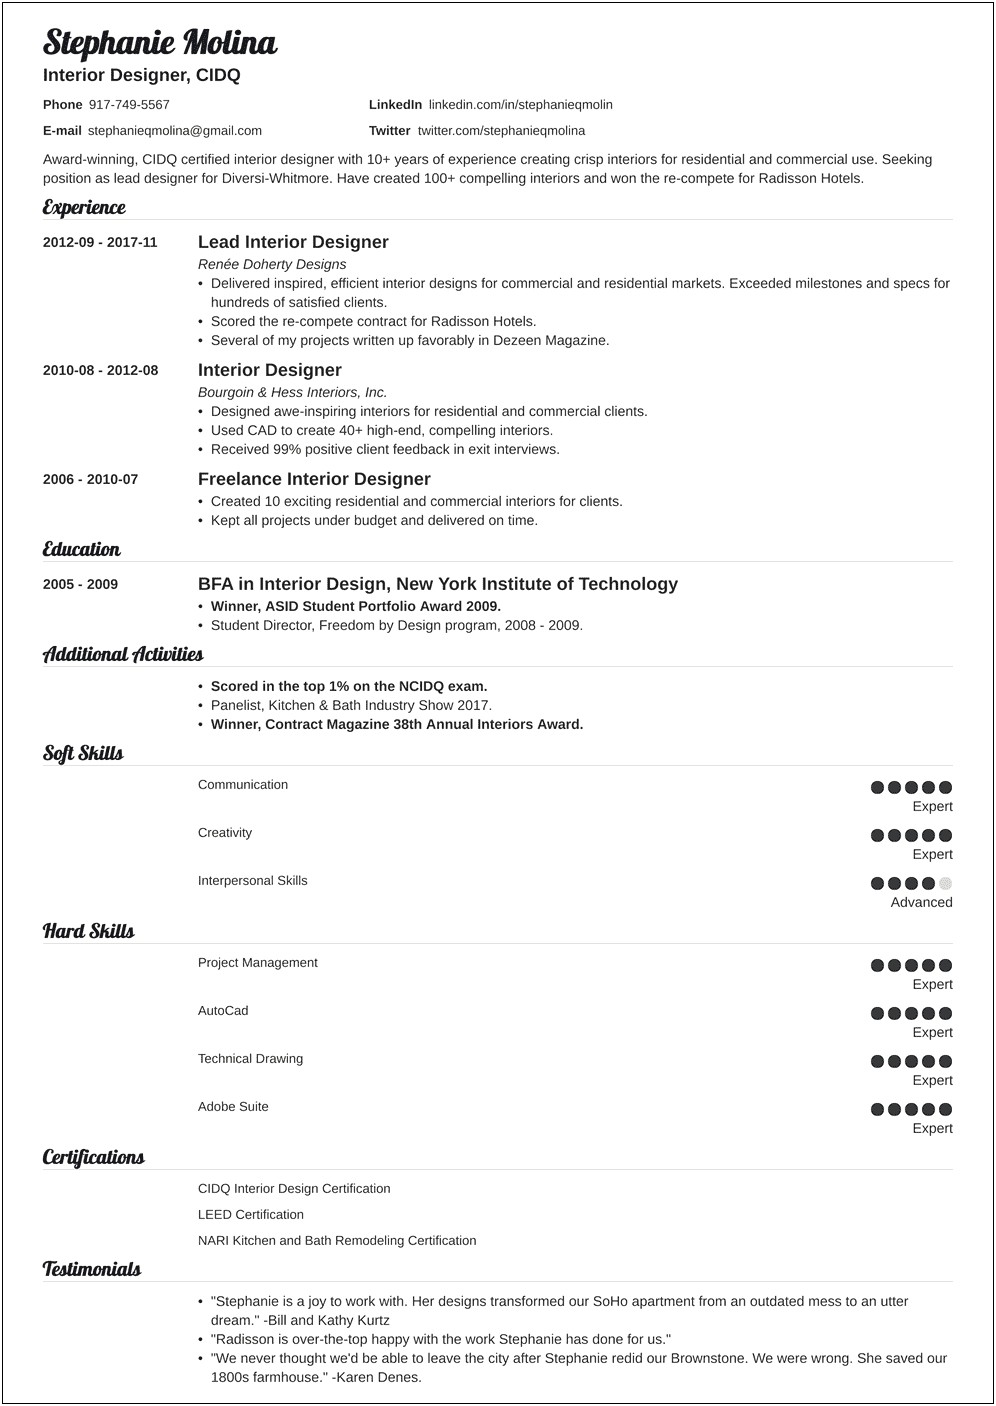 Interior Design Merchandising Manager Summary Resume